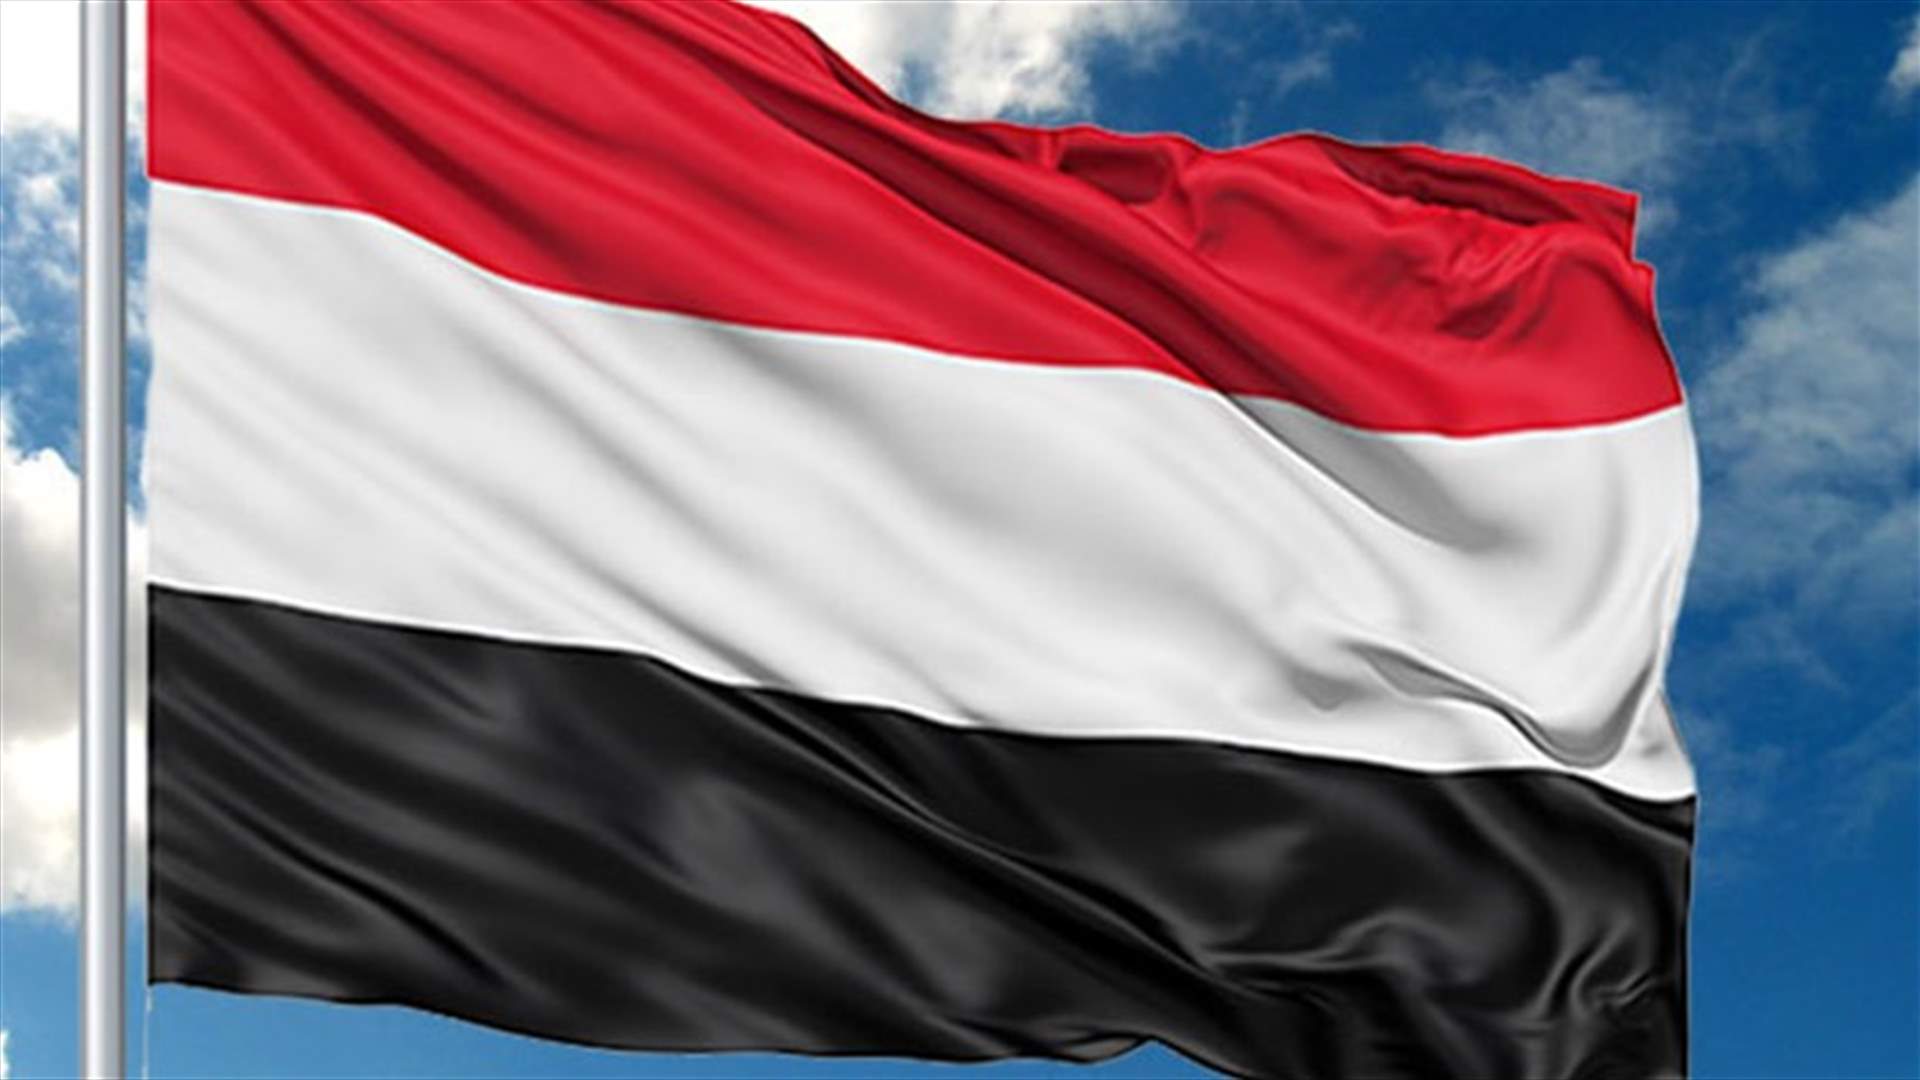 Suicide bombing hits southern Yemen city of Mukalla - residents